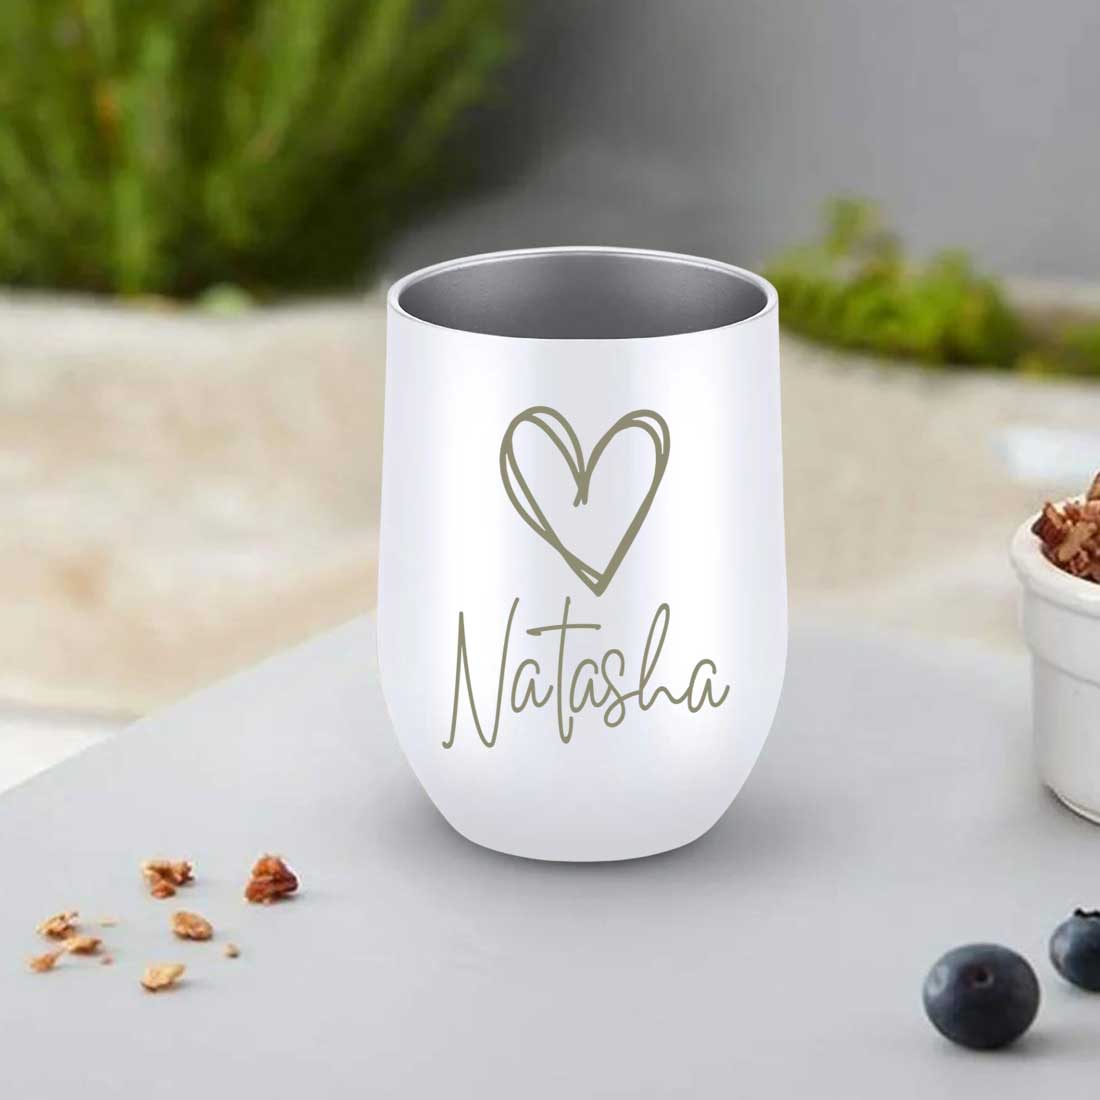 Buy Customized Insulated Coffee Flask Mug With Name – Nutcase